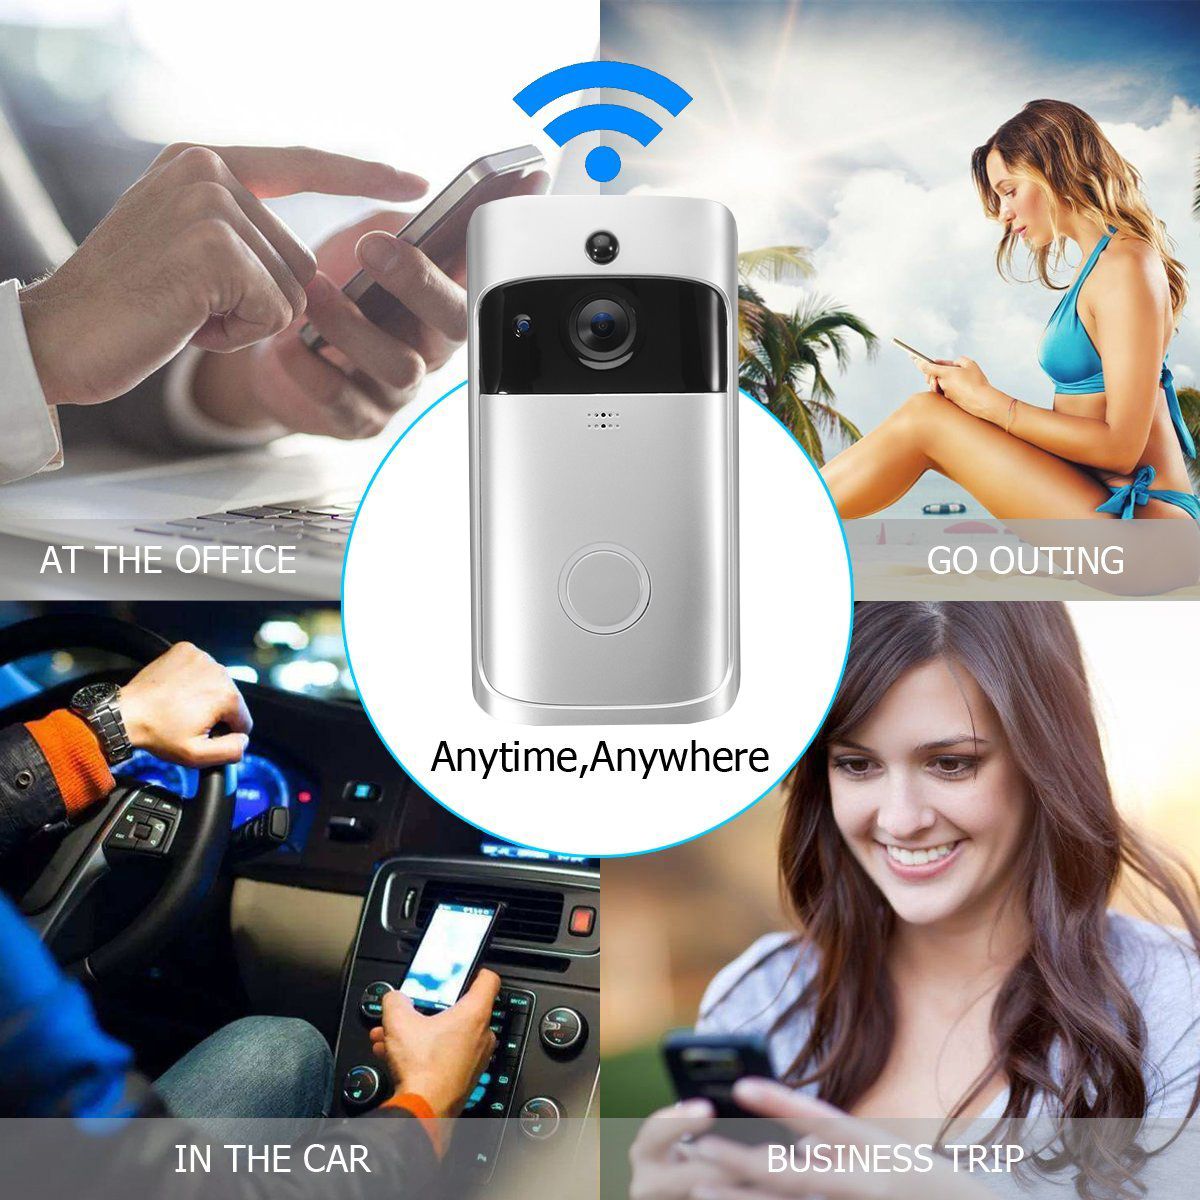 Wireless-WiFi-Video-Doorbell-Camera-Door-Bell-Two-Way-Audio-APP-Control-iOS-Android-Battery-Powered-1363899